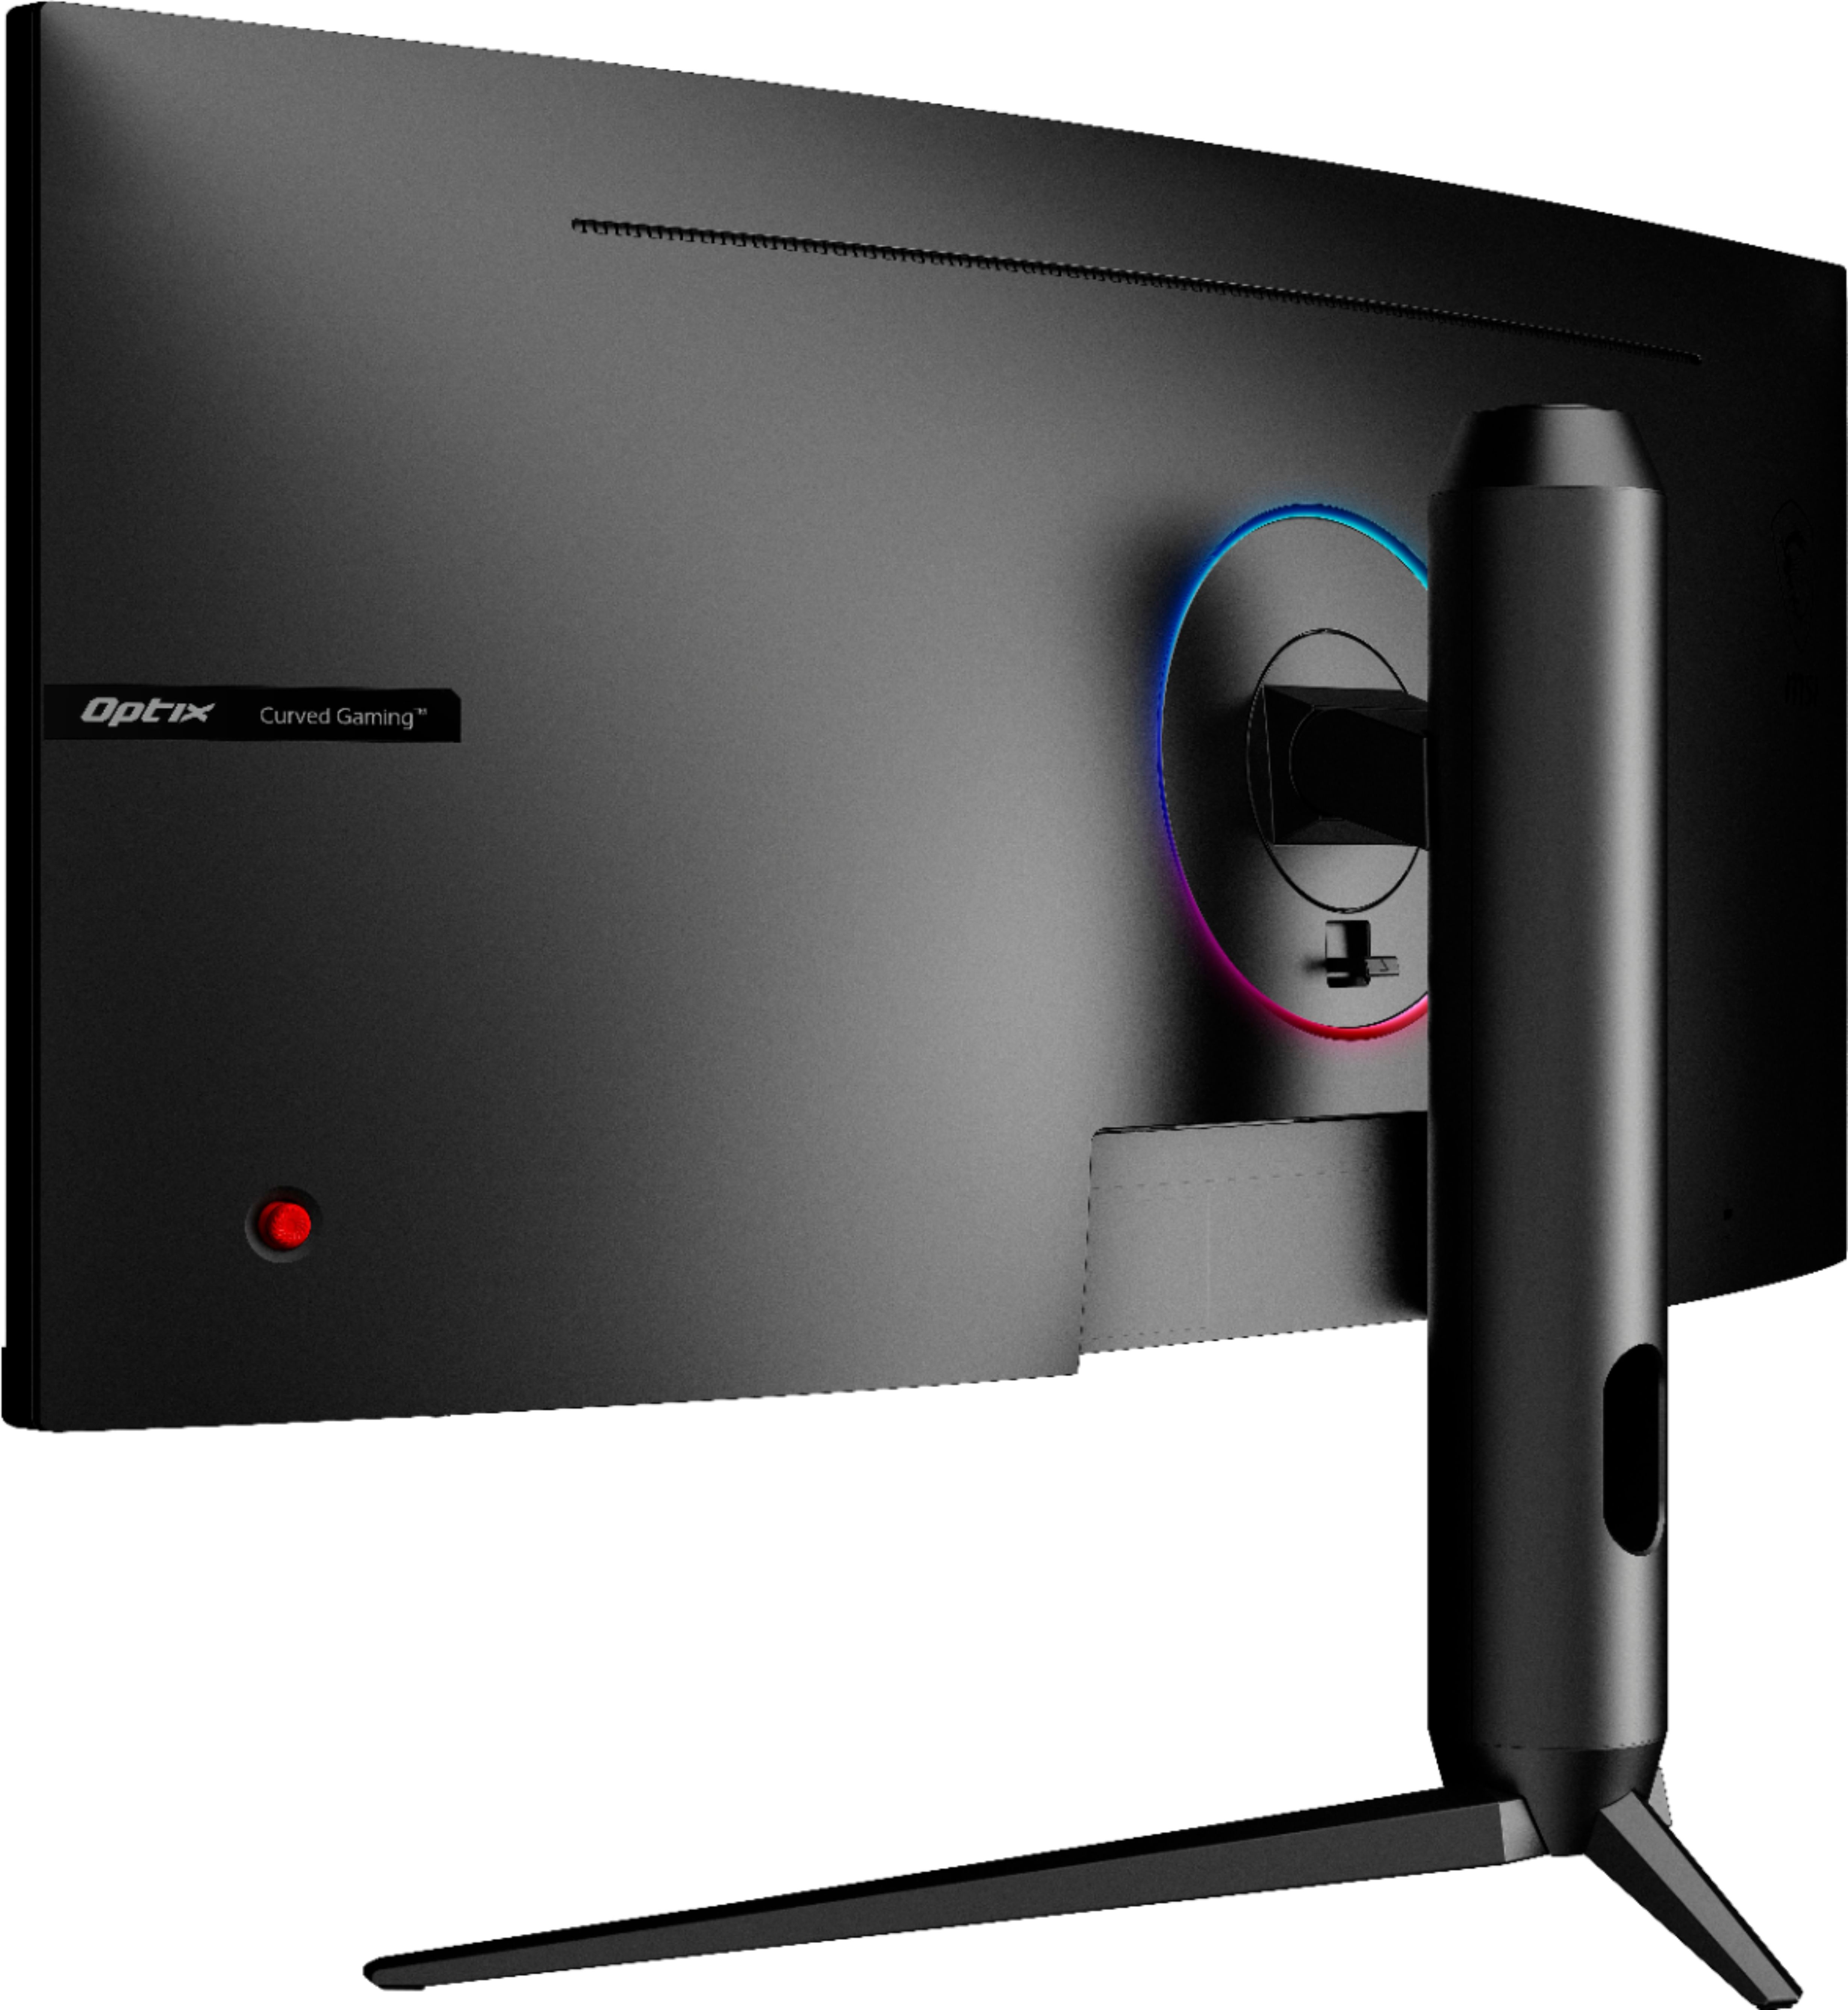 MSI Optix 27 LED Curved FHD FreeSync Monitor (DisplayPort, HDMI) Black  MAG270CR - Best Buy